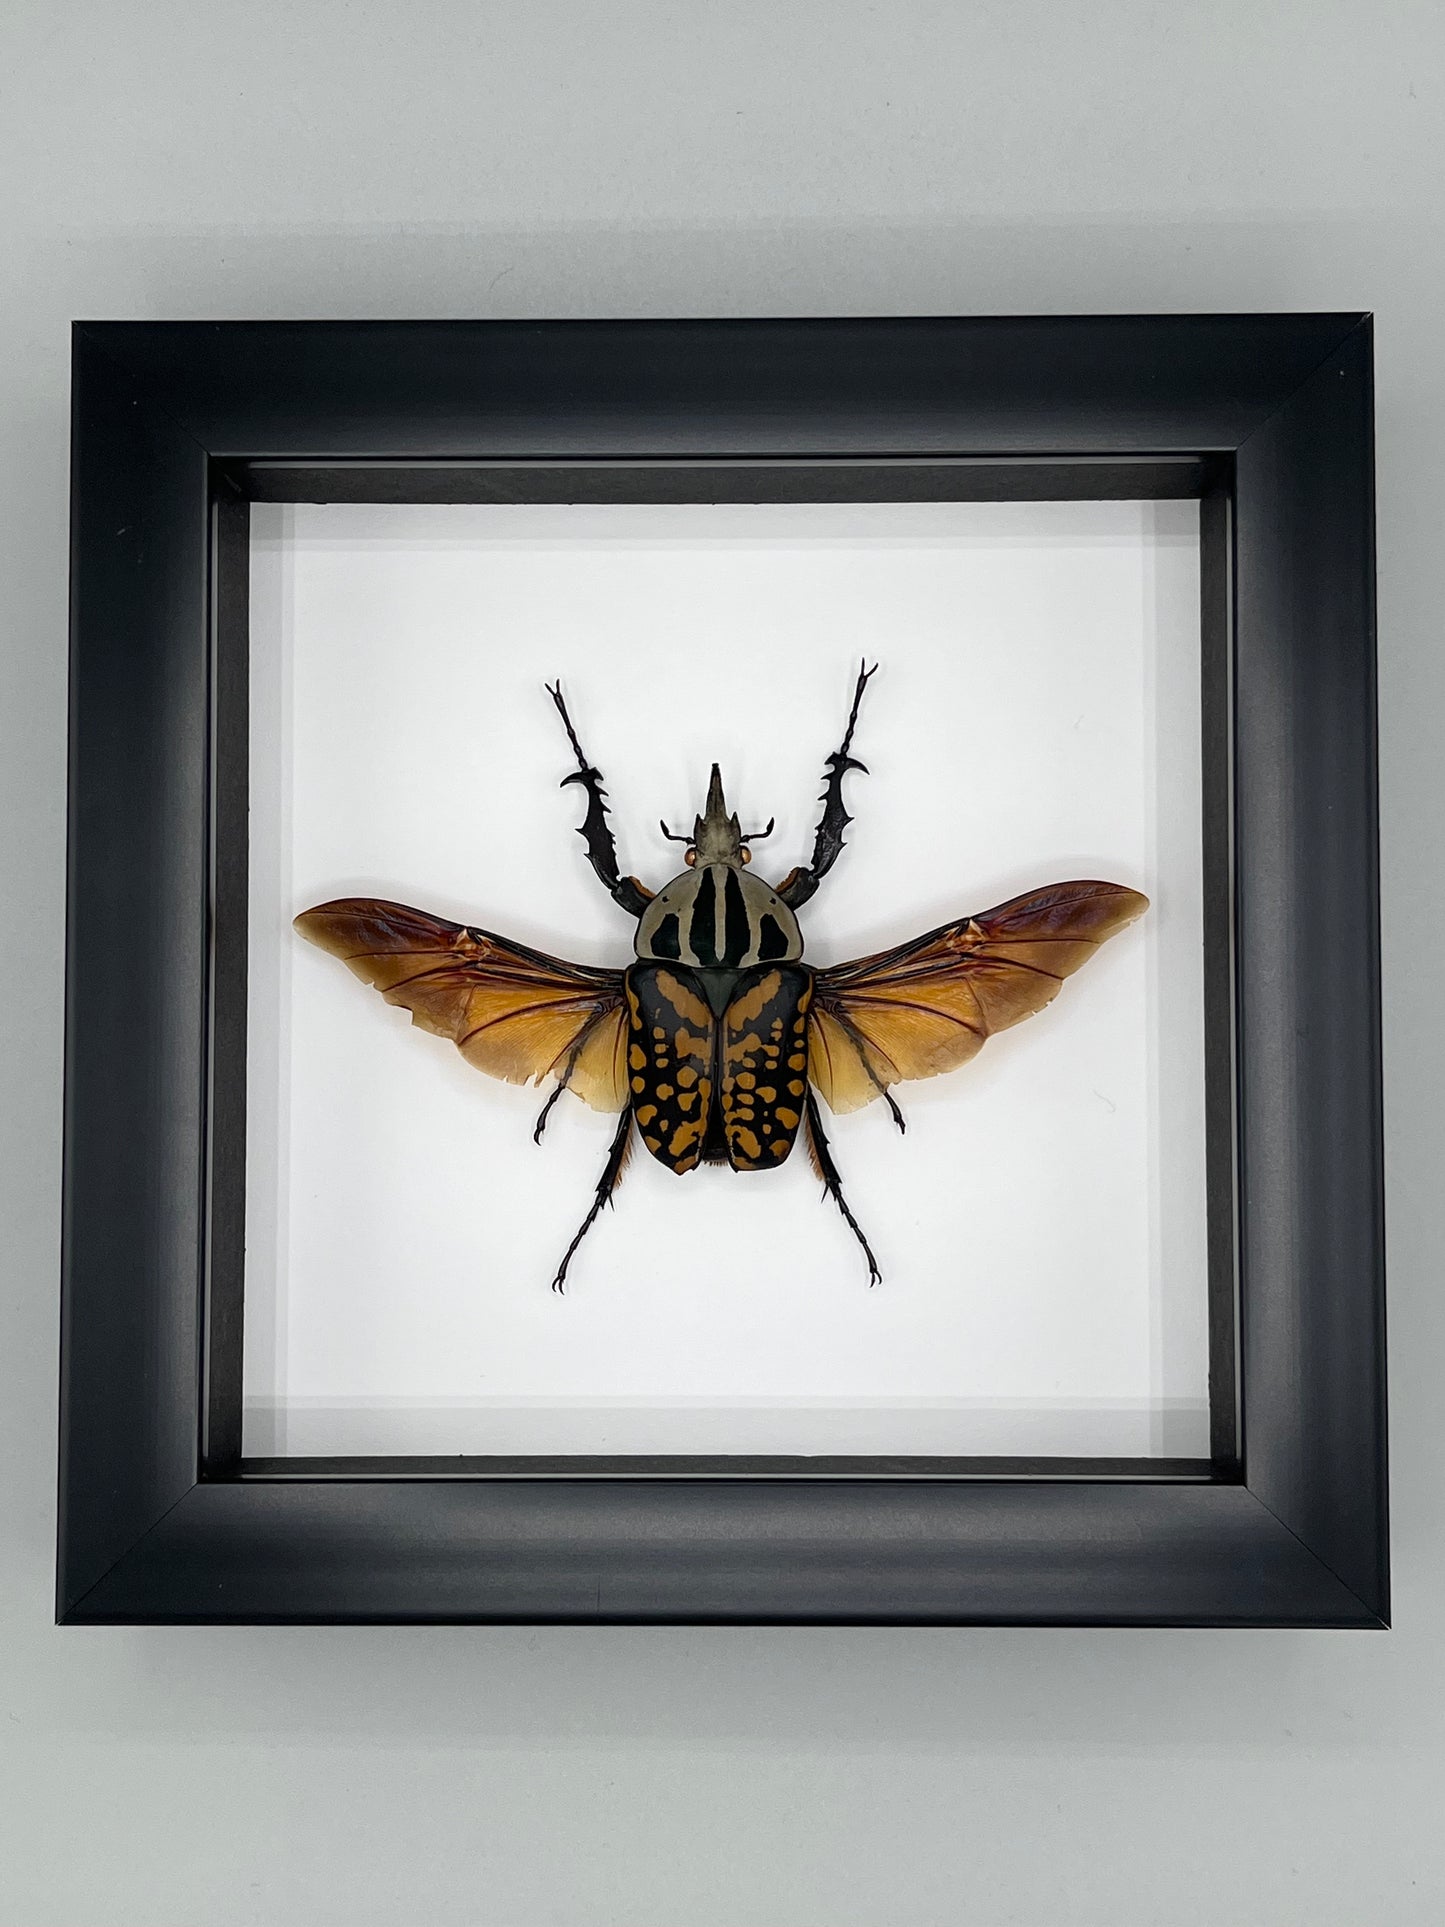 Beetle - Mecynorhina oberthuri decorata